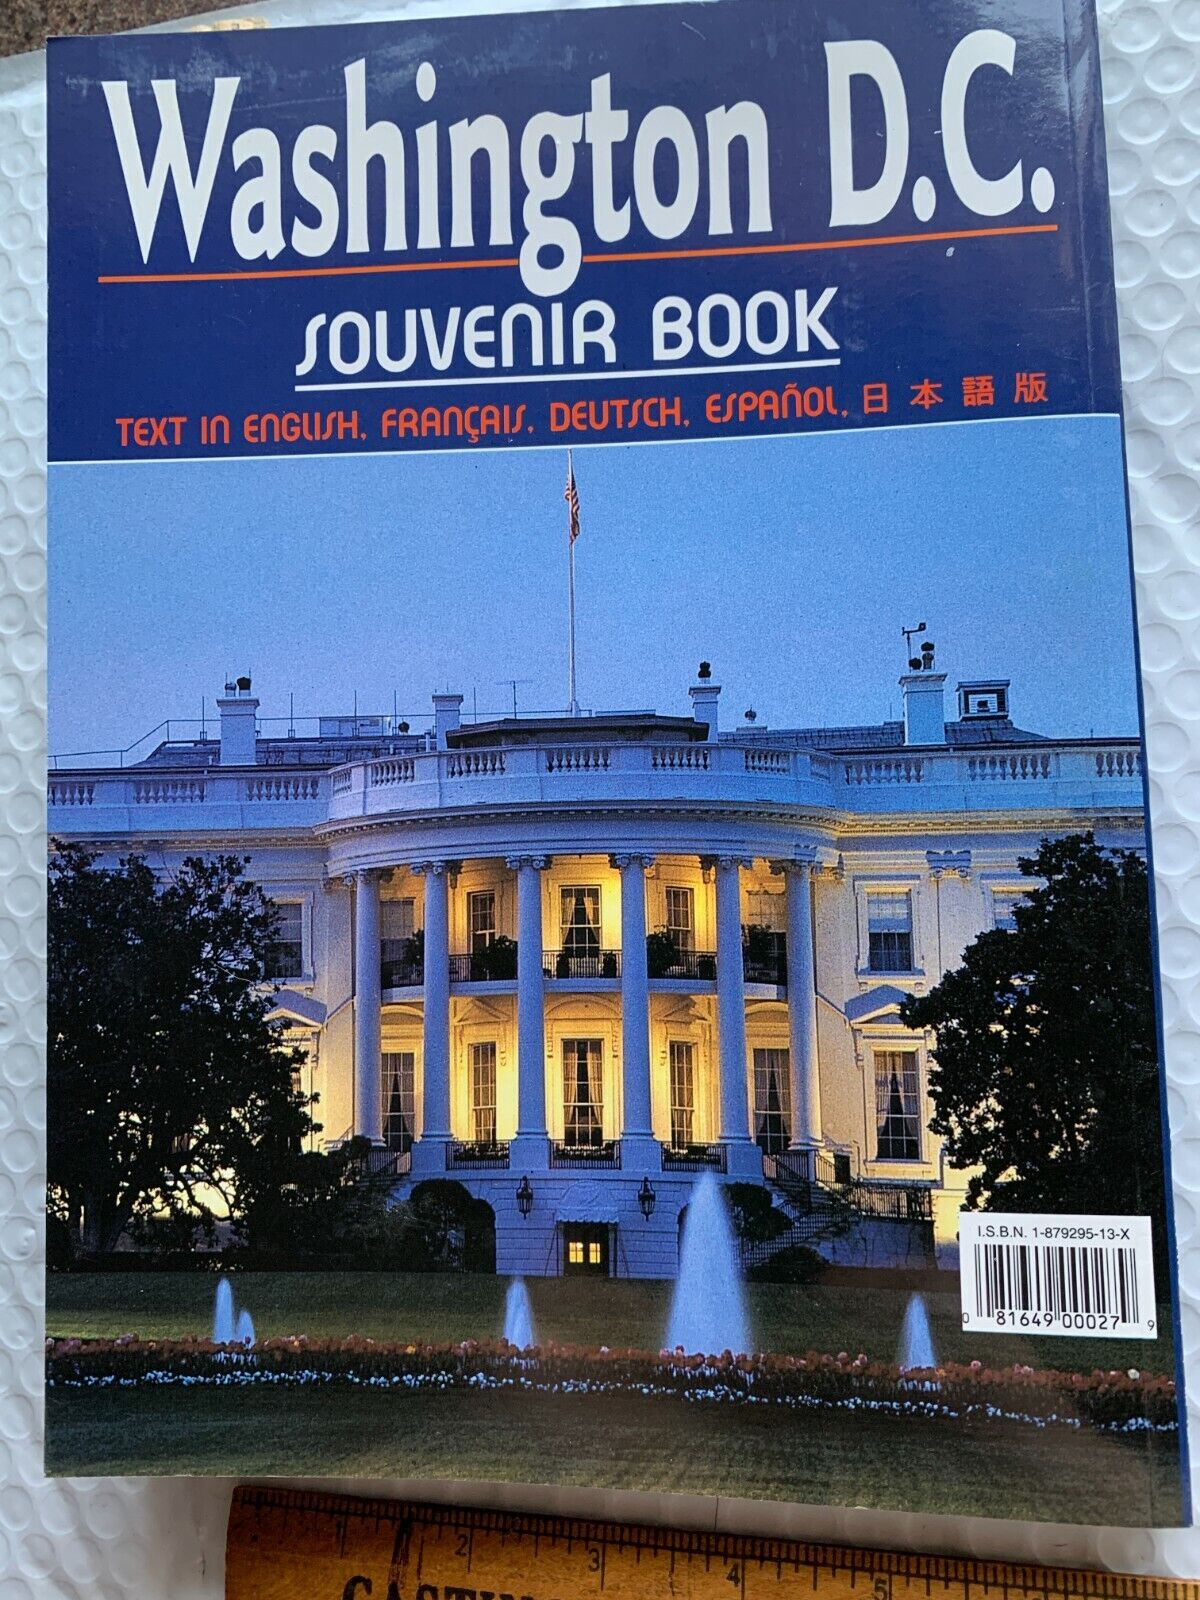 WASHINGTON D.C. SOUVENIR BOOK 1997 SLIGHTLY USED